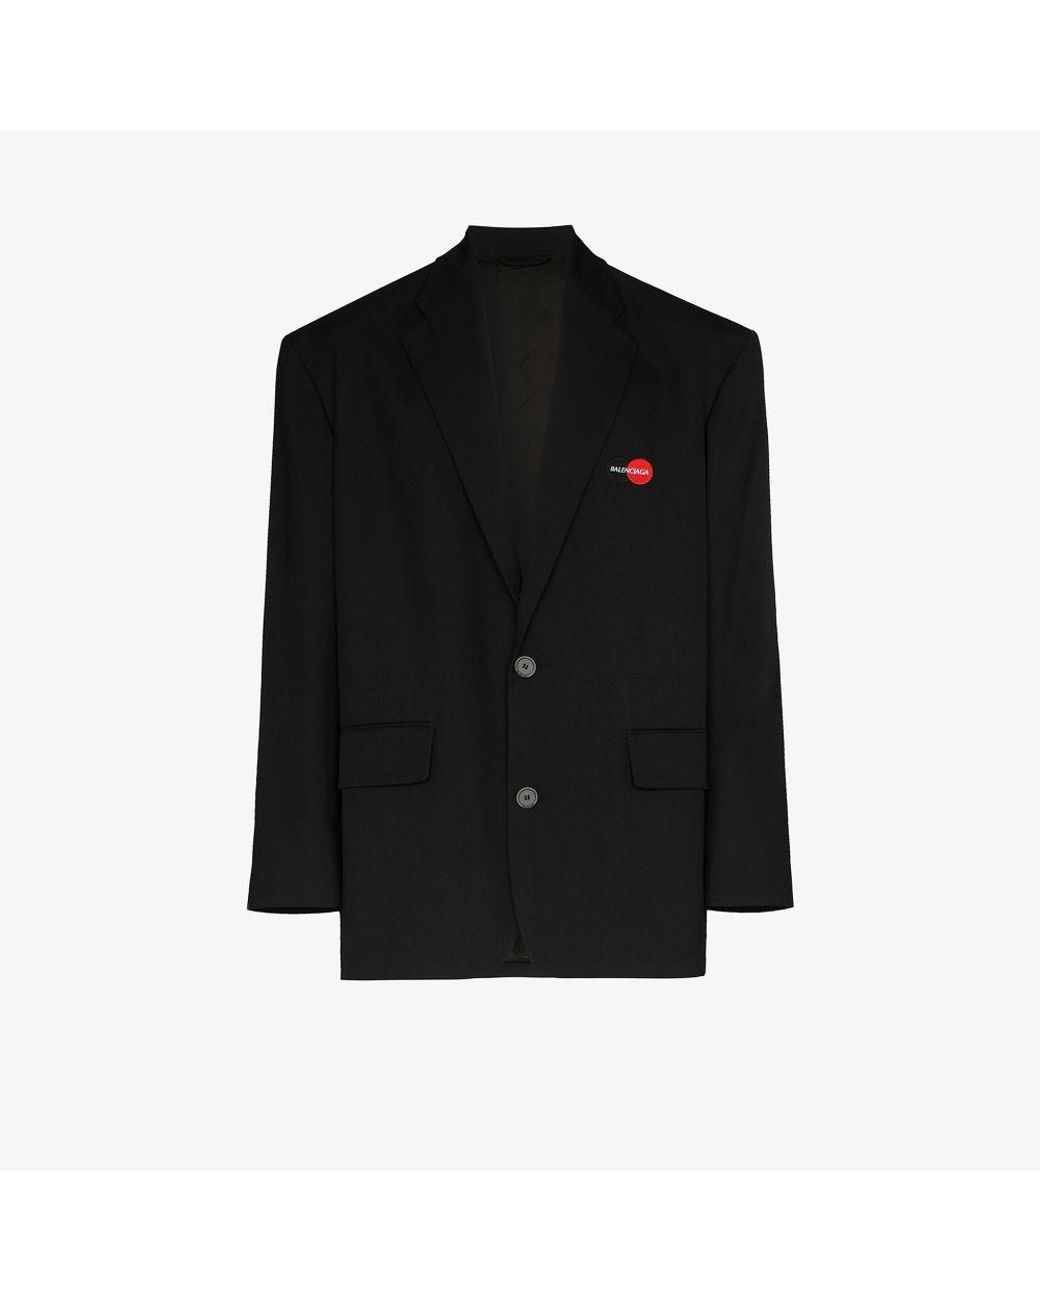 Balenciaga Logo Patch Mens Cotton Blazer Suit Jacket Size 44 Sports Coat   eBay